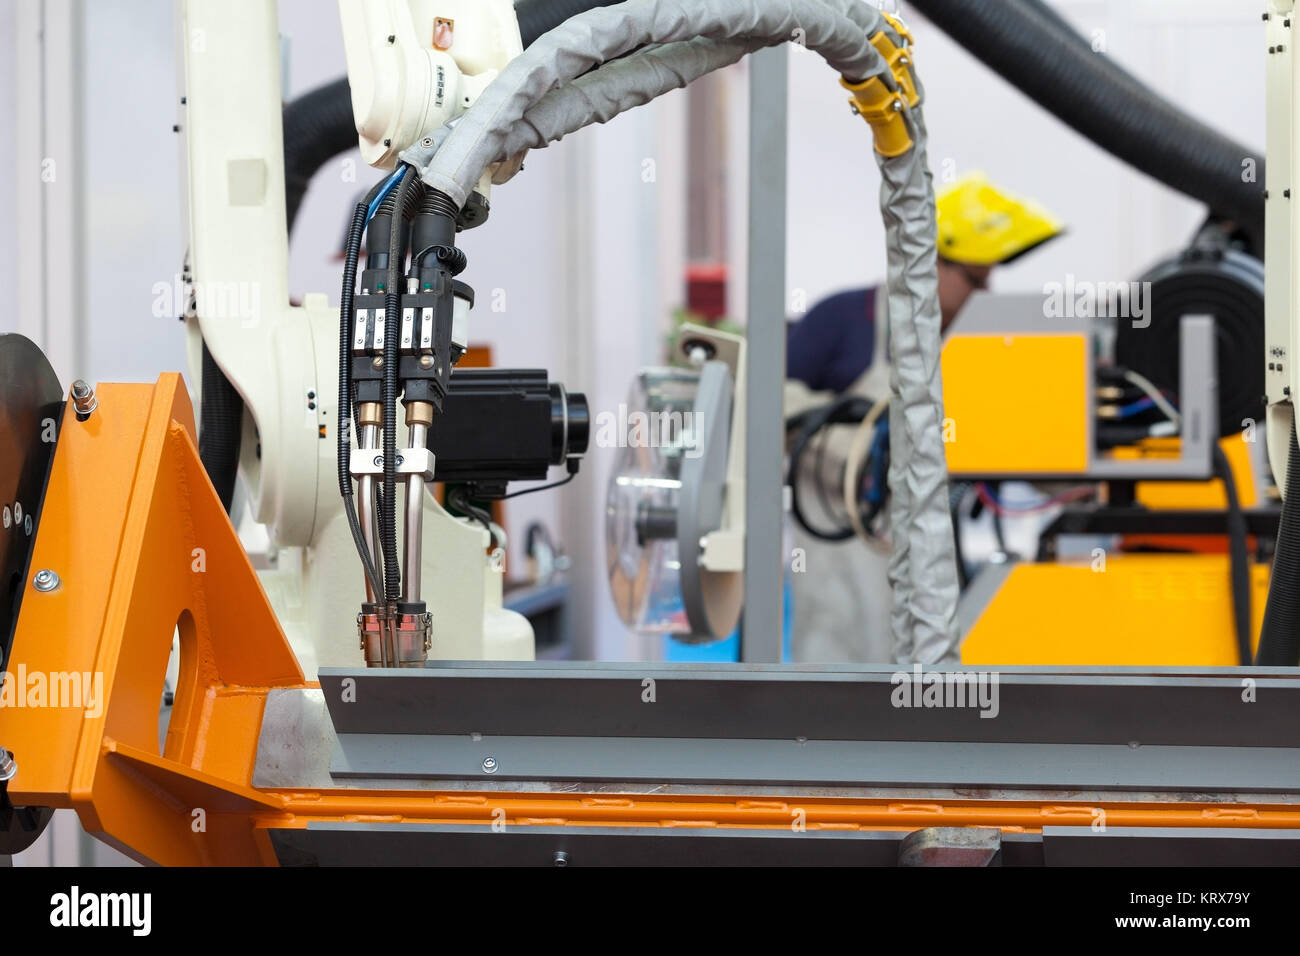 Industrial welding robot arm in the focus, blurred welder in the background Stock Photo